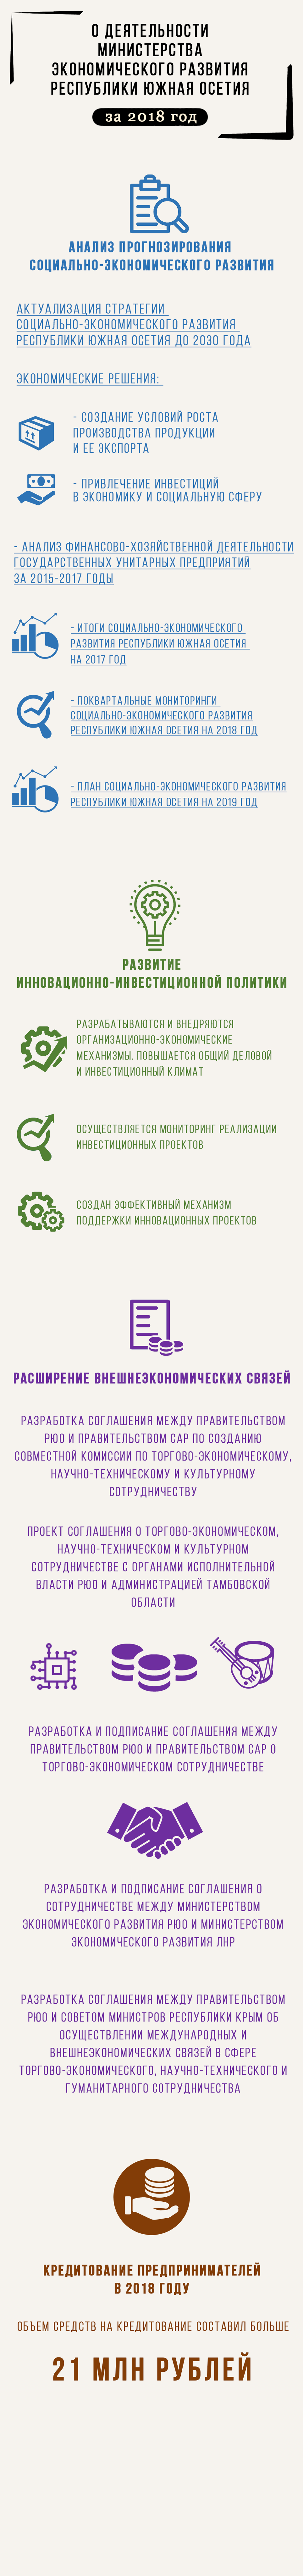 infogr-oset-2019-economy